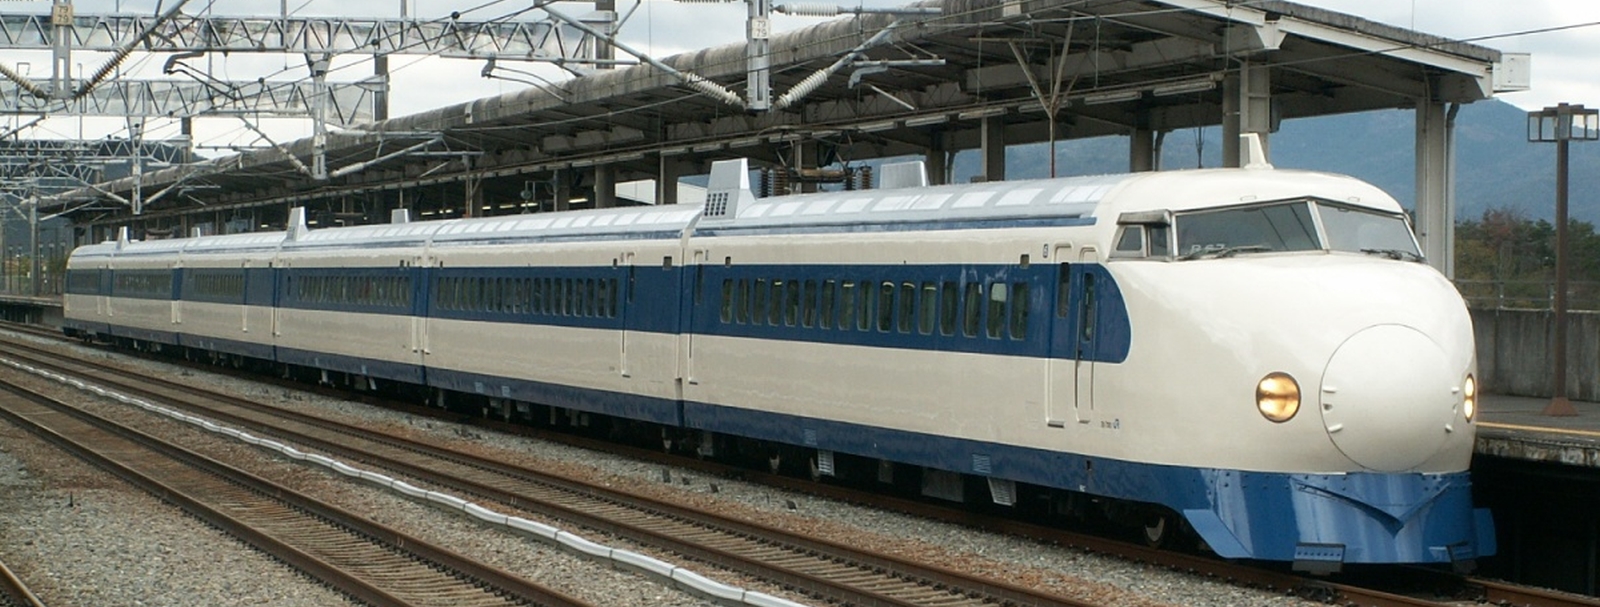 A trainset in Higashi-Hiroshima station